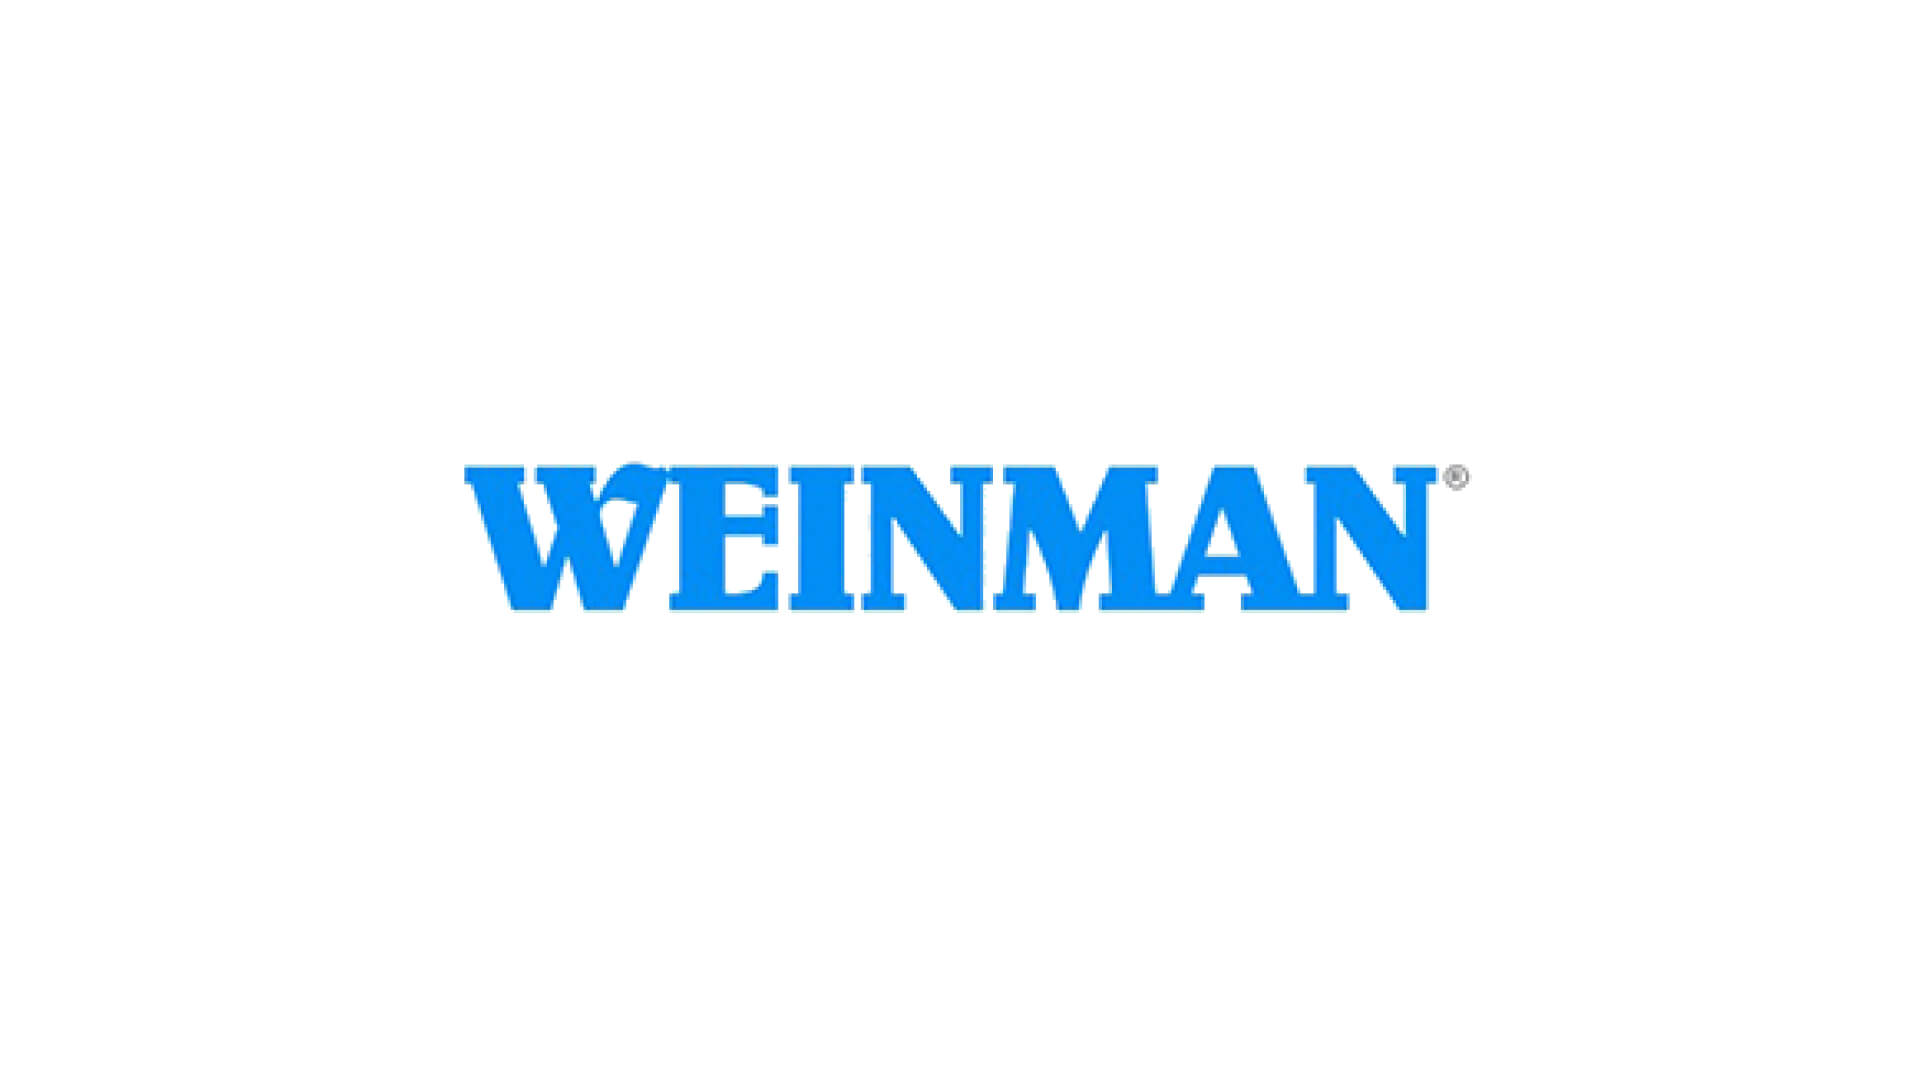 Weinman logo in color